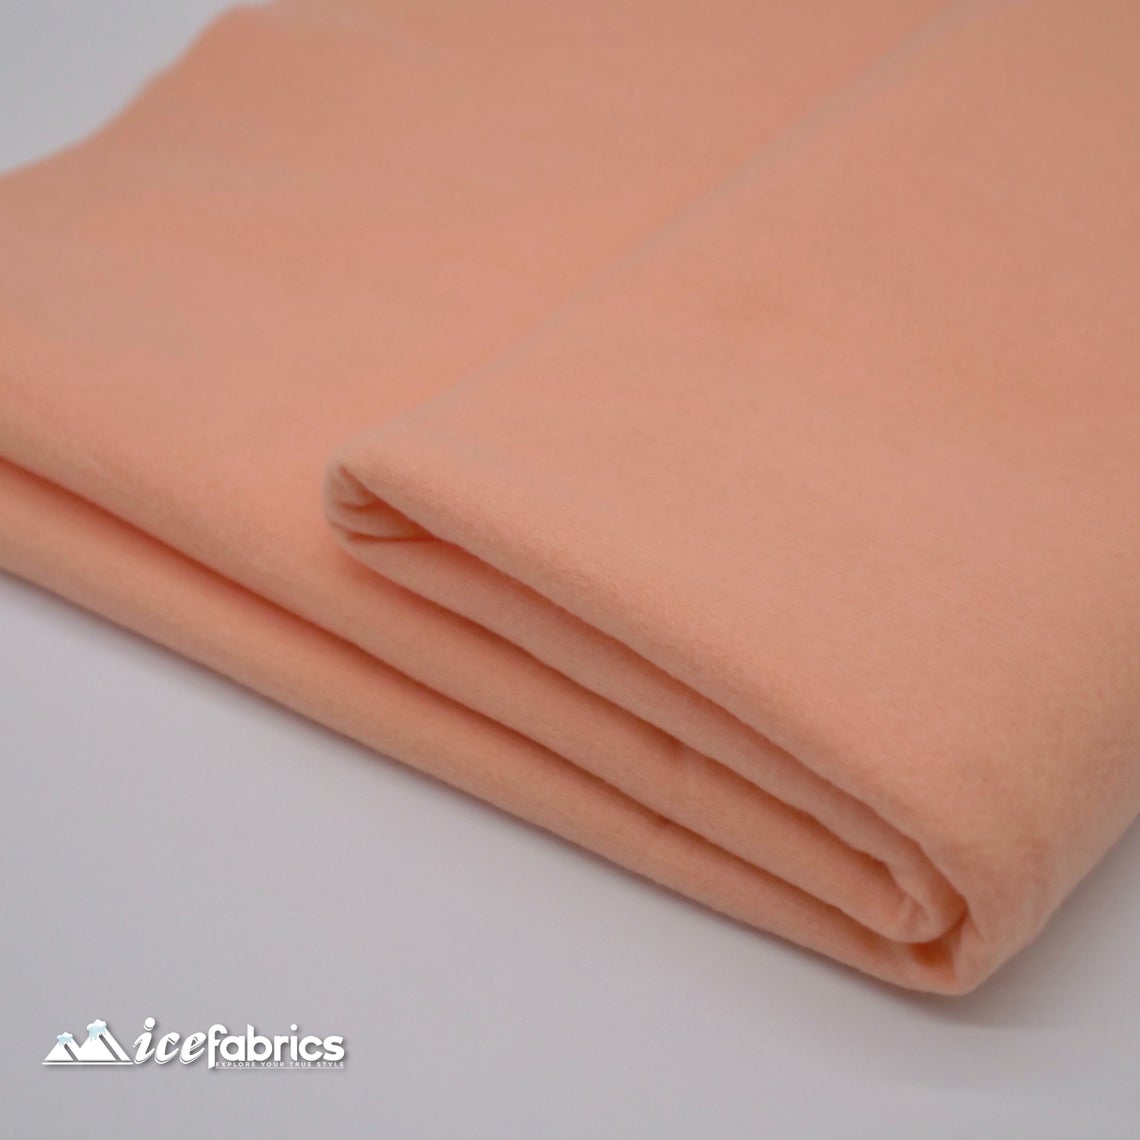 Acrylic Felt Fabric By The Roll | 20 yards | Wholesale Fabric ICE FABRICS Peach